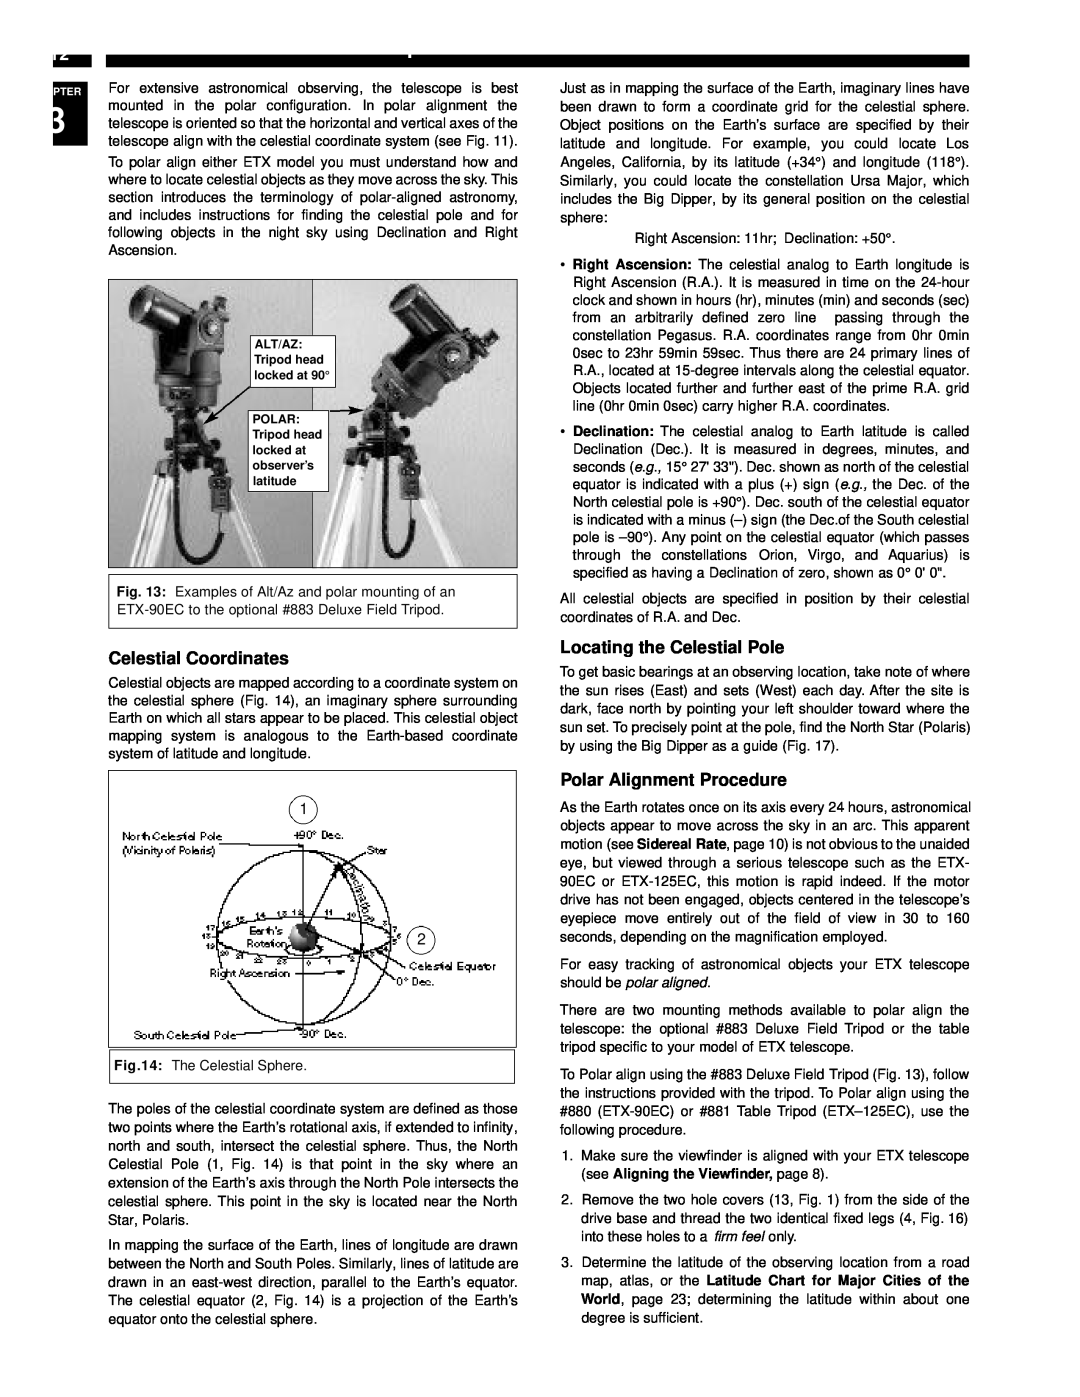 Meade ETX-90EC instruction manual Celestial Coordinates, Locating the Celestial Pole, Polar Alignment Procedure 